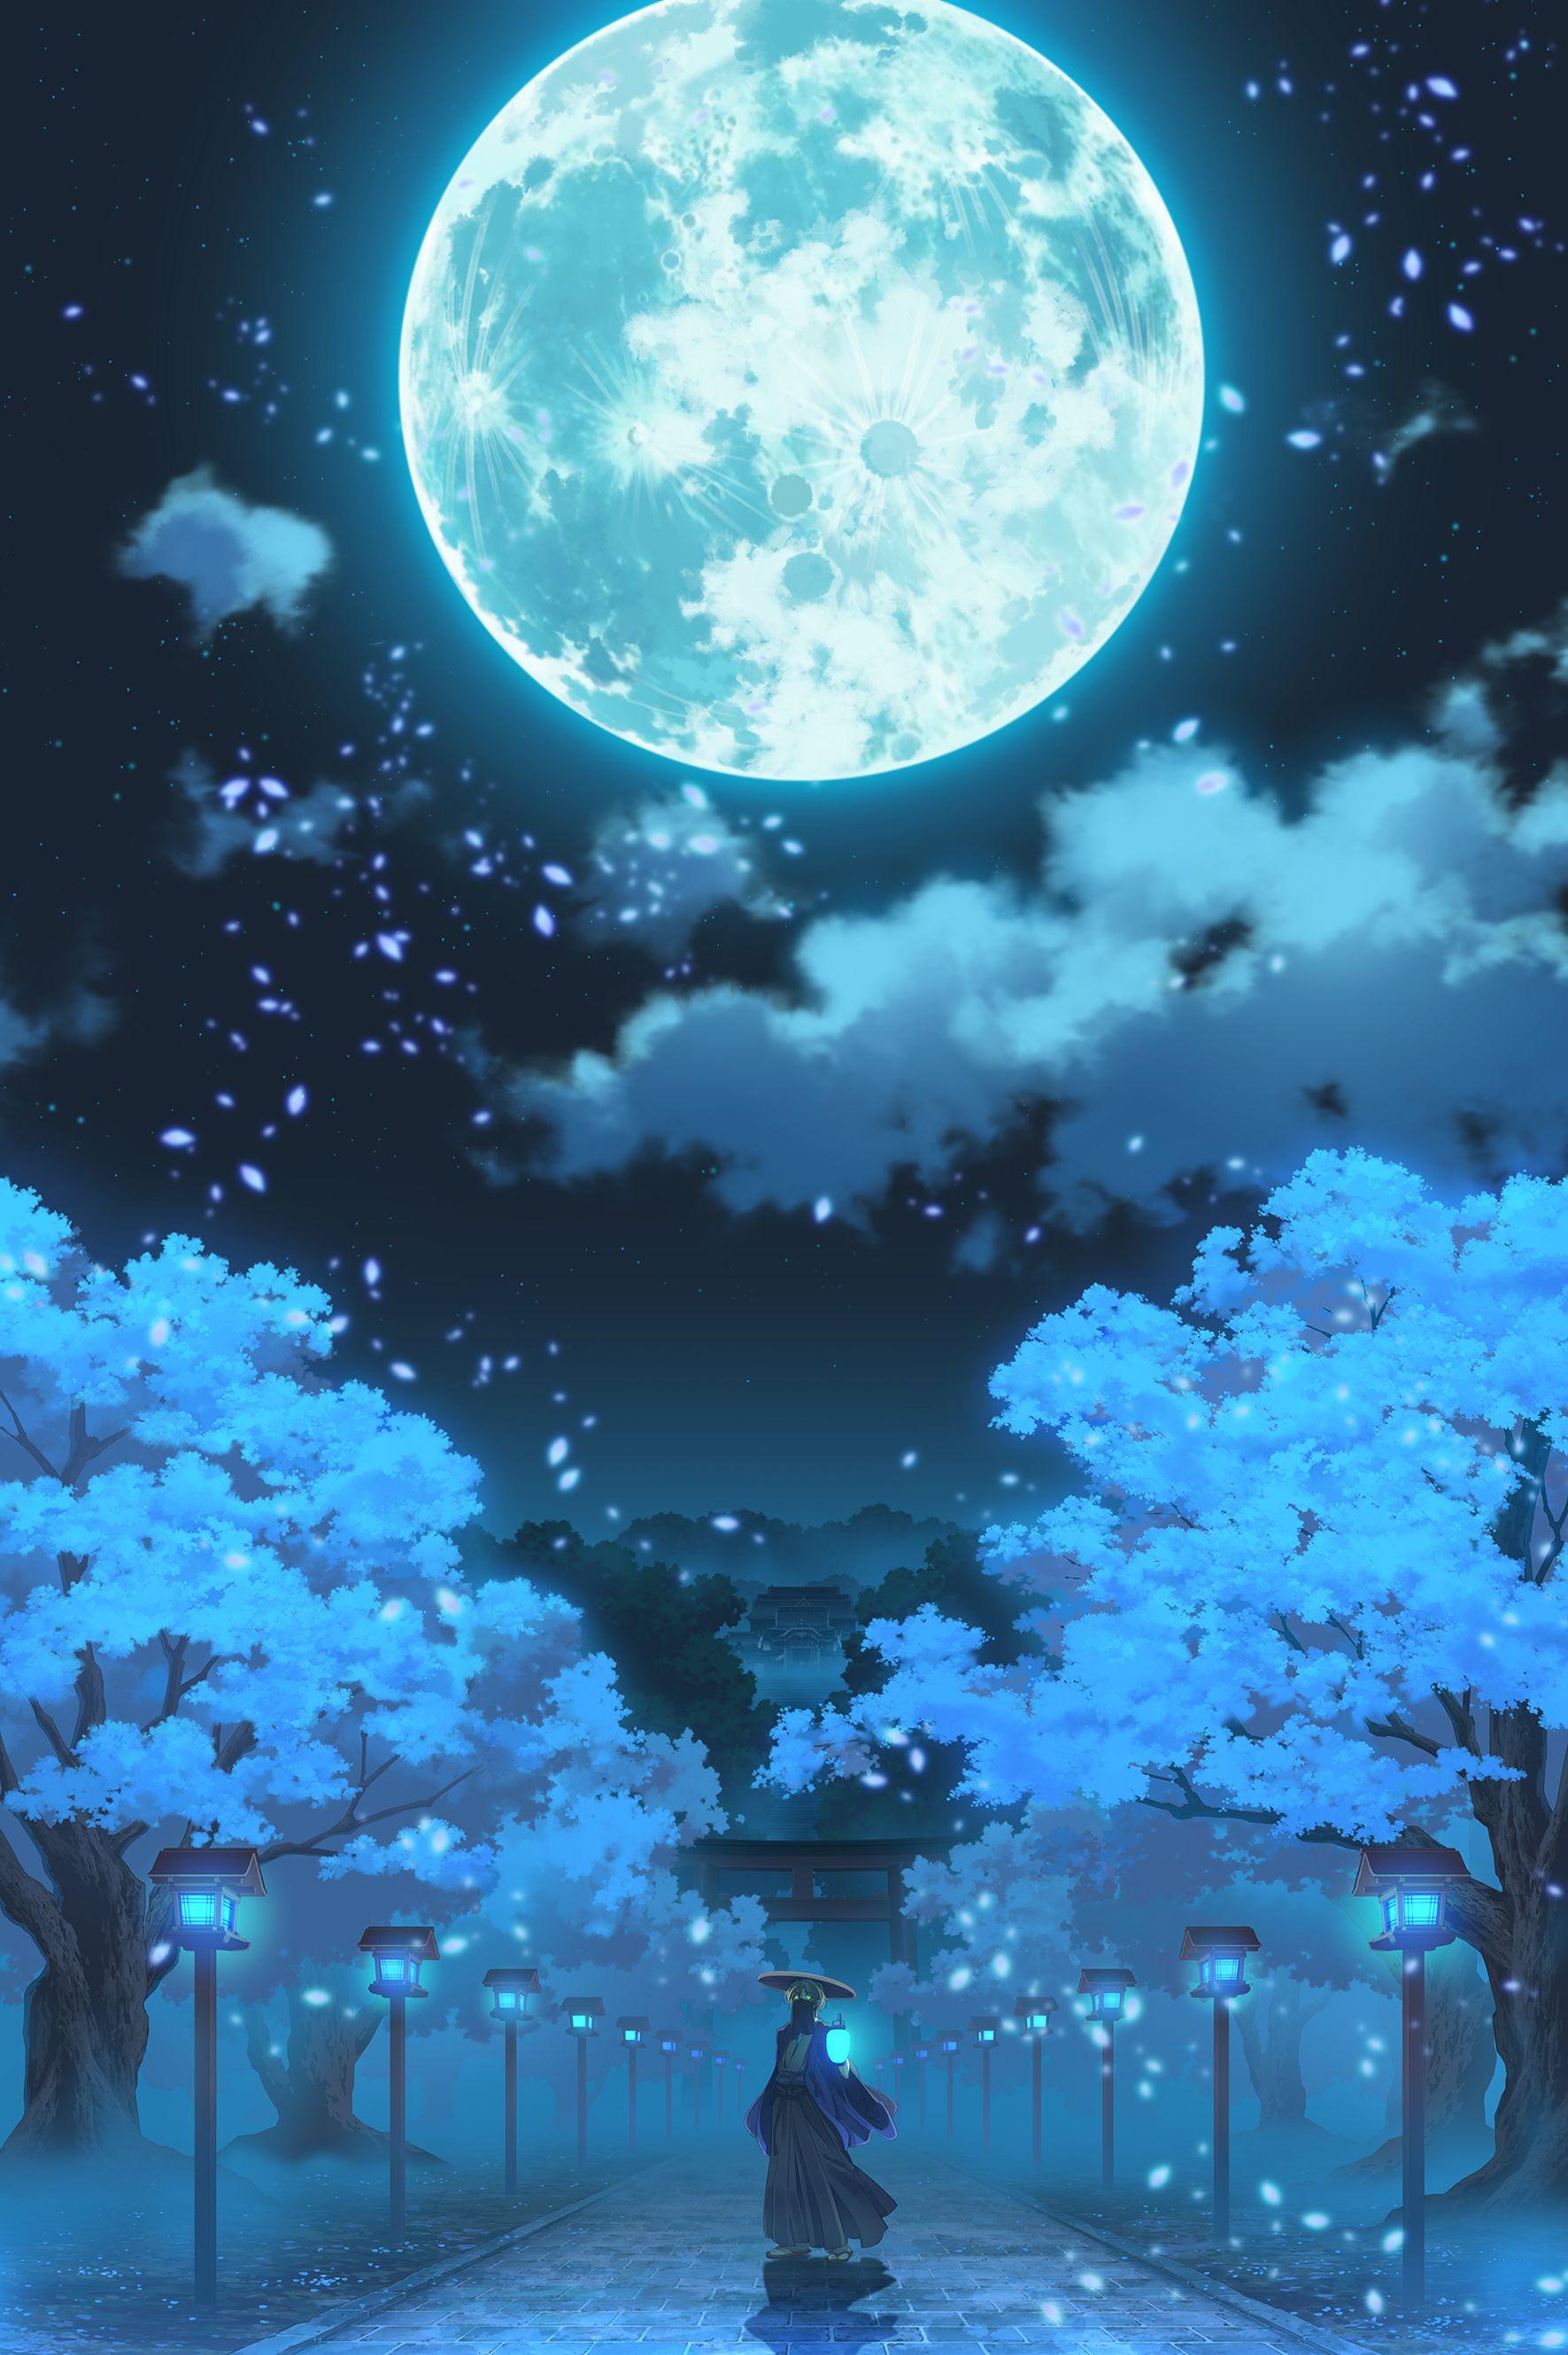 Moonlight - Other & Anime Background Wallpapers on Desktop Nexus (Image  2231664)